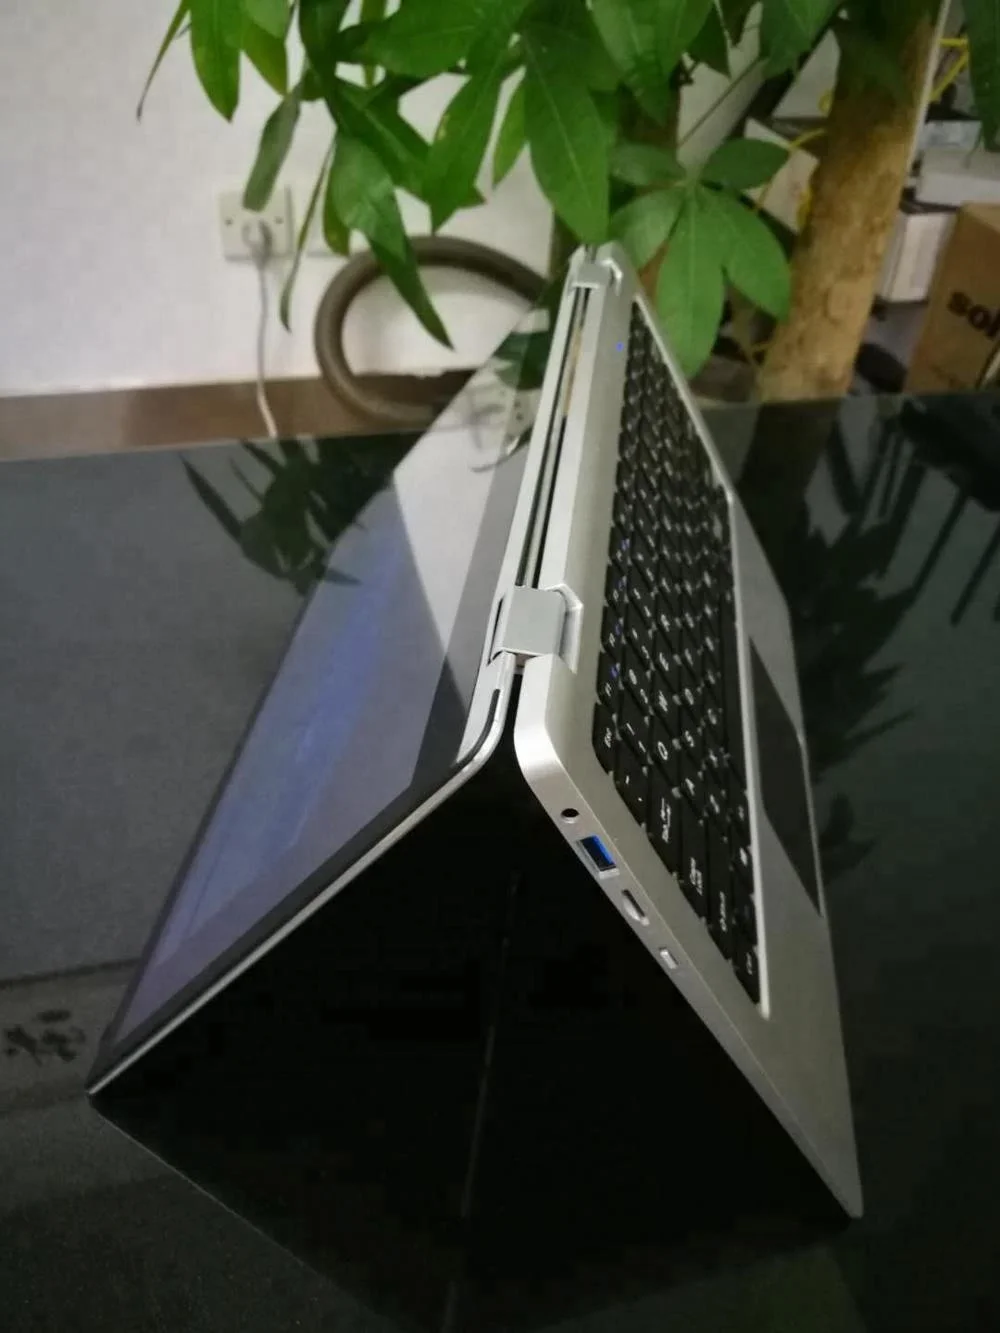 13.3'' Laptop Aluminum Notebook Intel Core i5 7200U 2.5Ghz-3.1Ghz Dual Core 8GB RAM 500GB HDD Ultrabook Win10 Laptop Computer